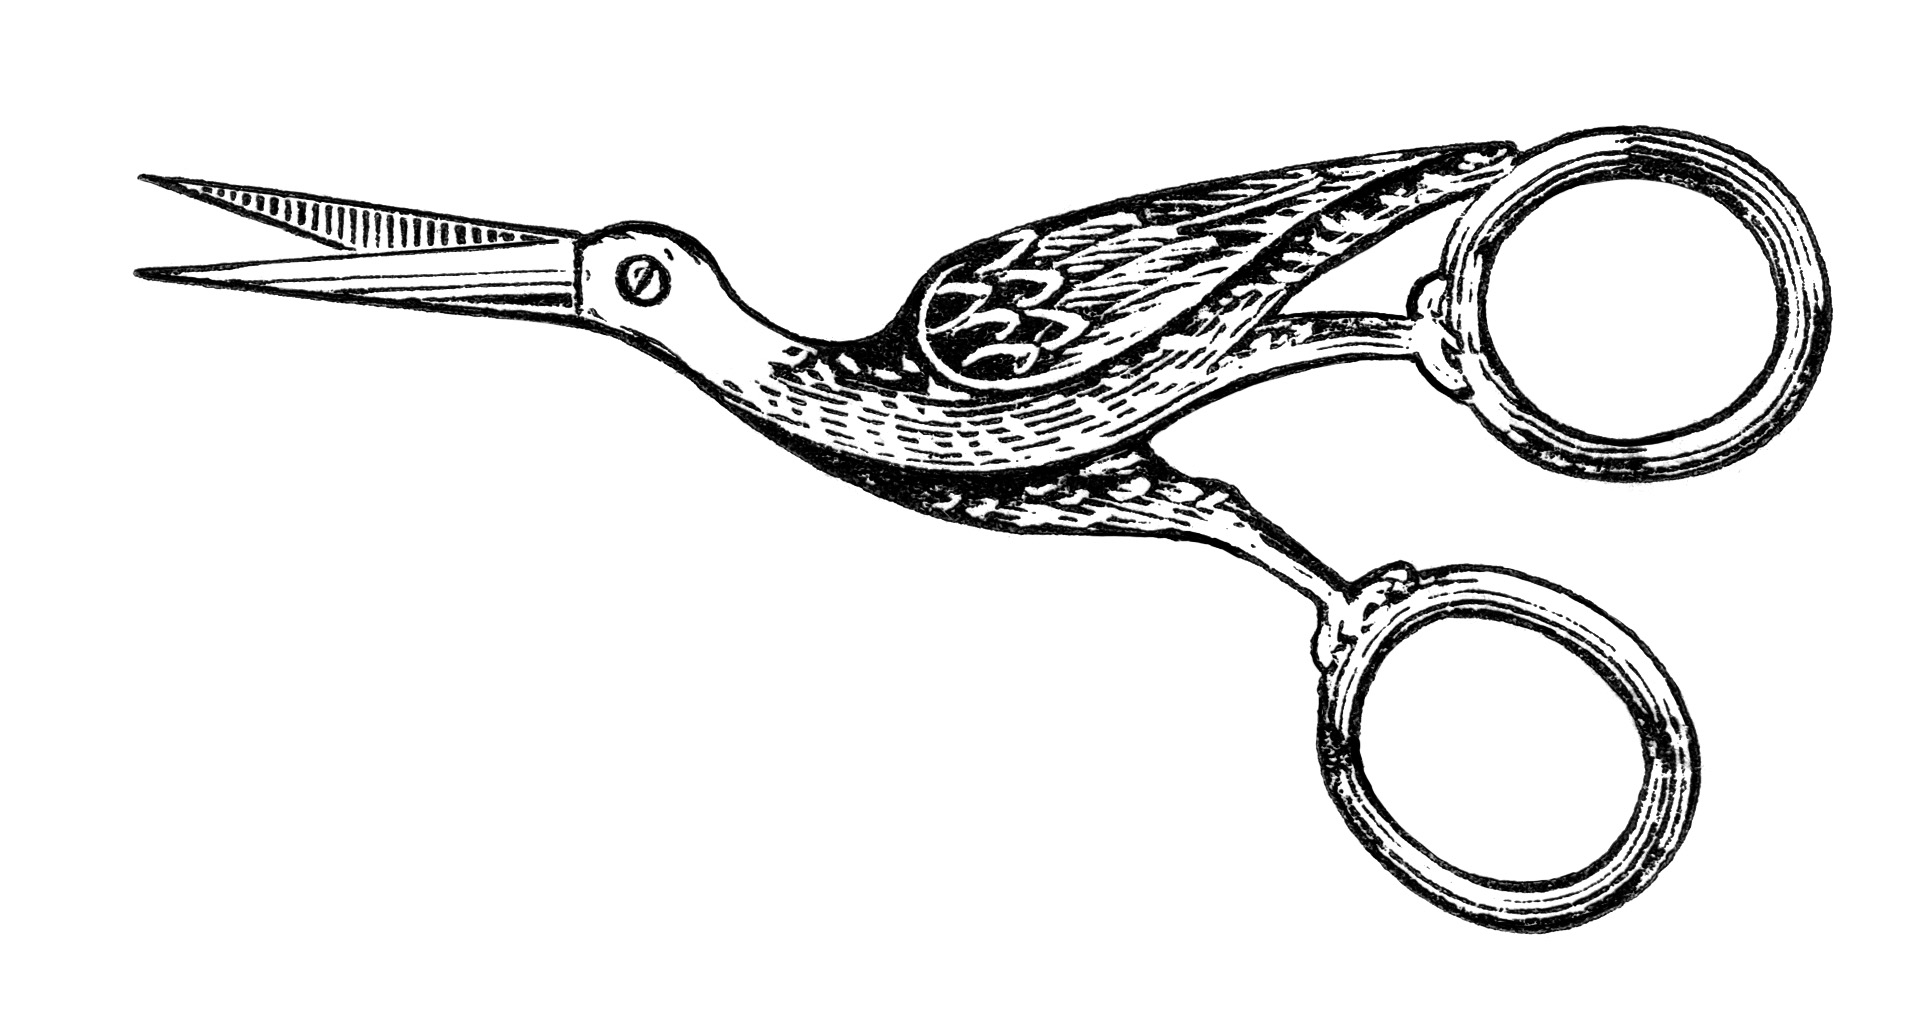 Bird clip art old. Shears clipart embroidery scissors